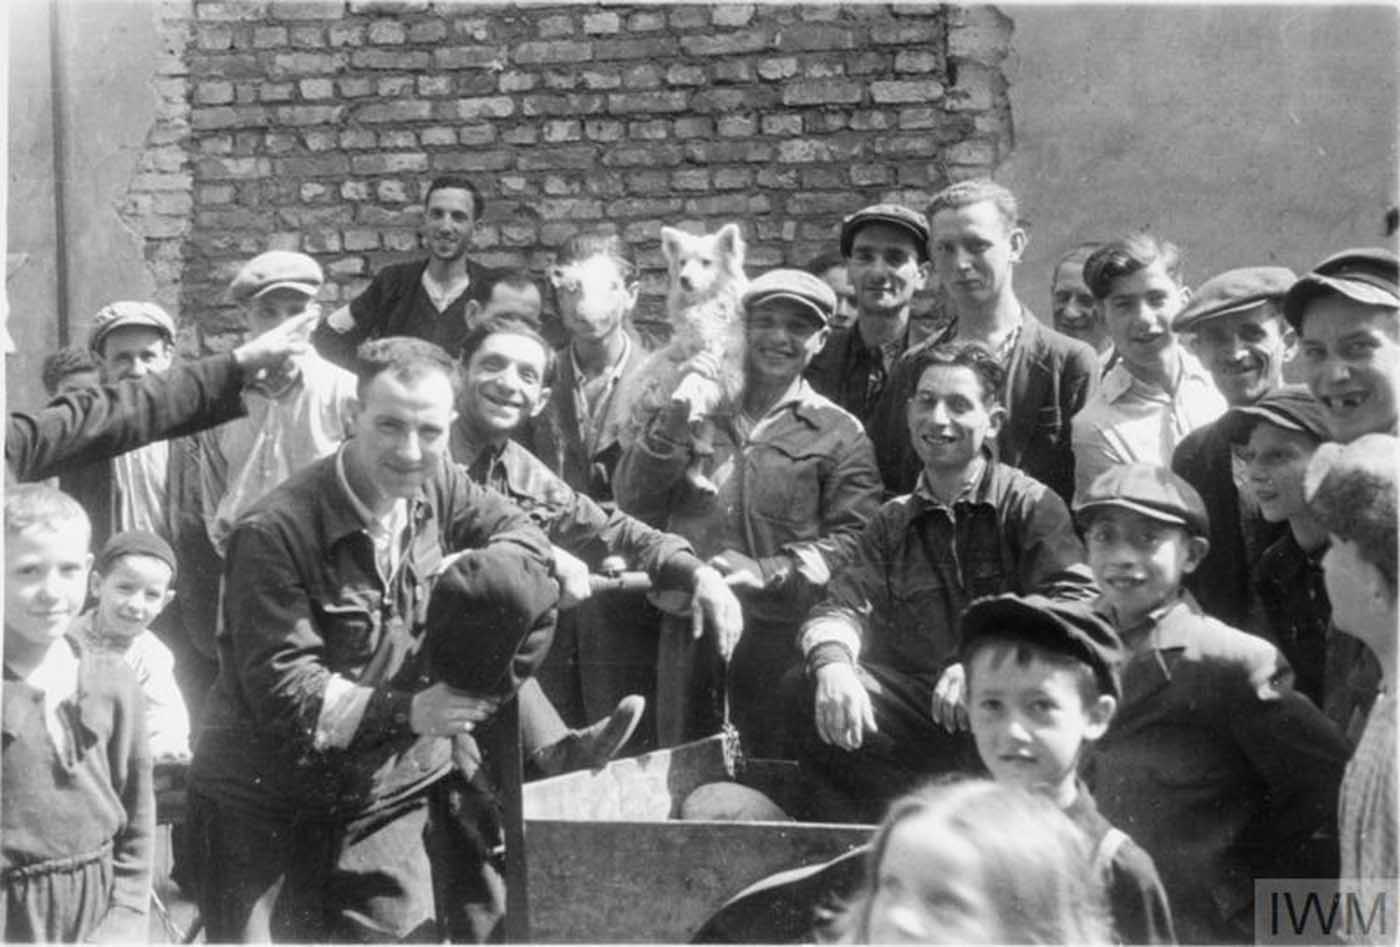 Vie quotidienne dans le ghetto de Varsovie, 1941